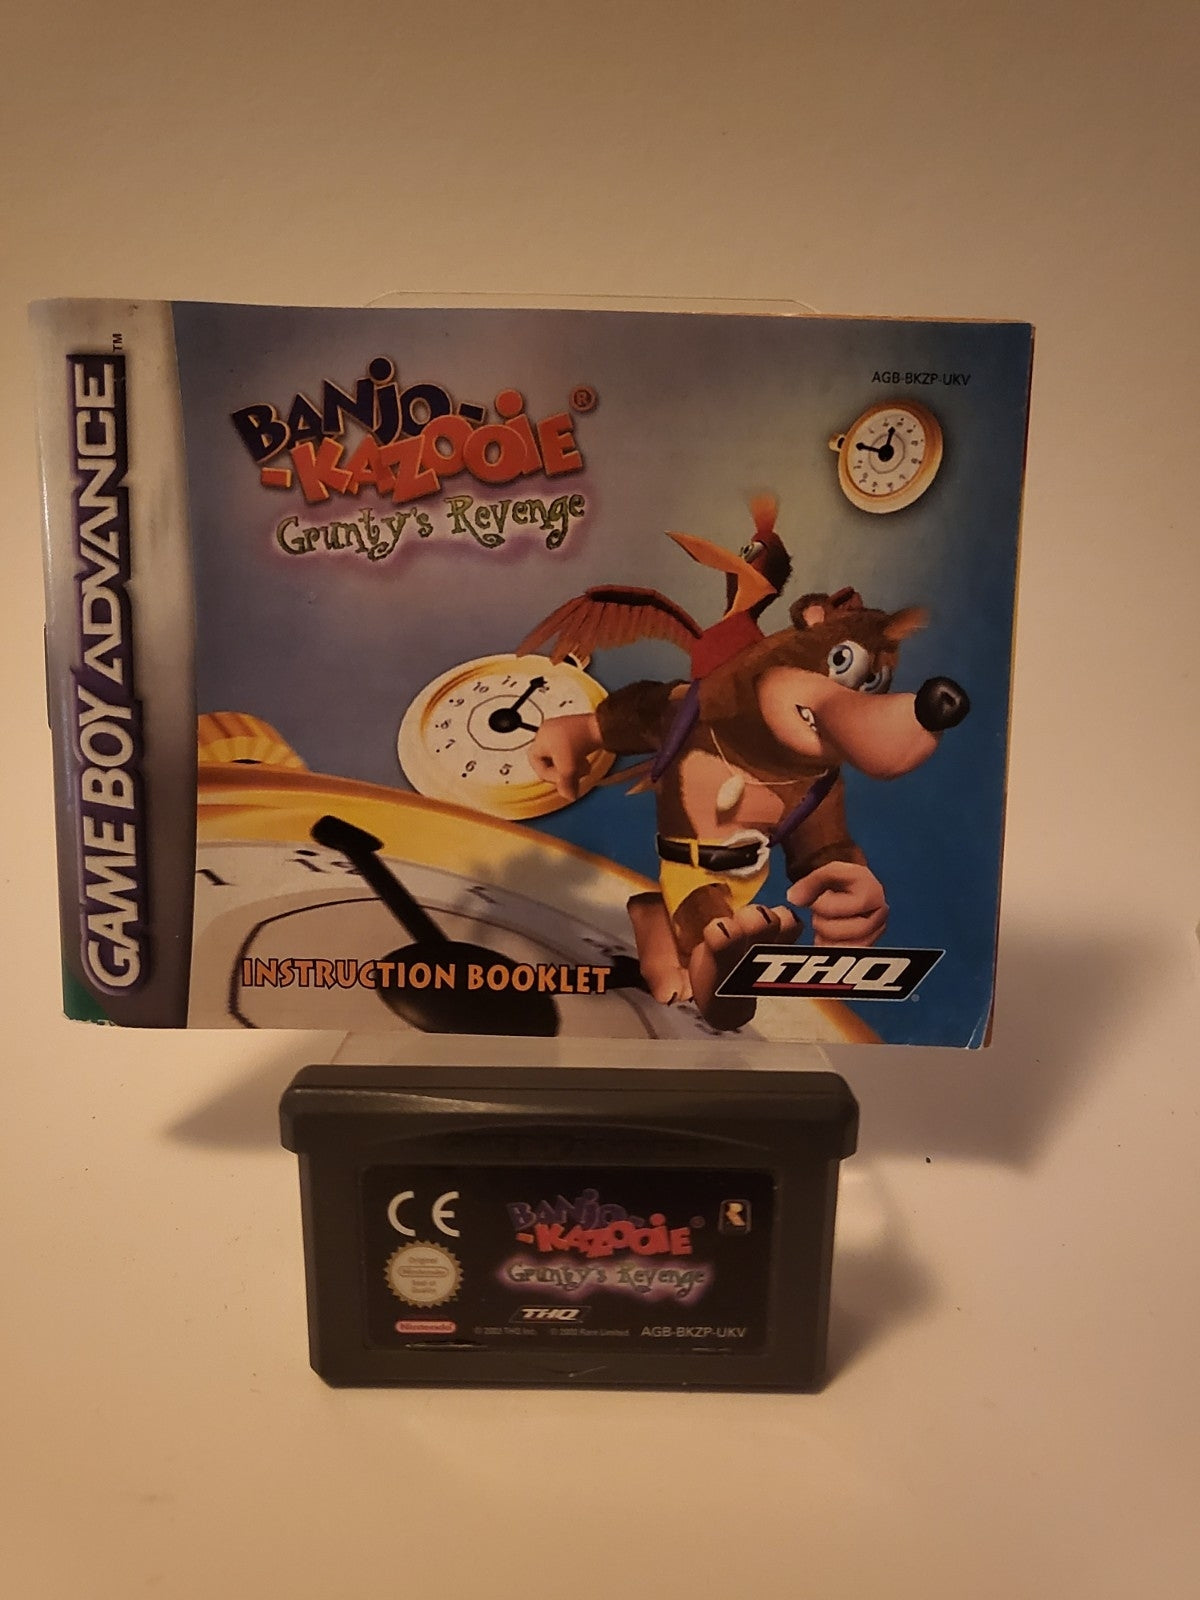 Banjo Kazooie Grunty's Revenge GameBoy Advance